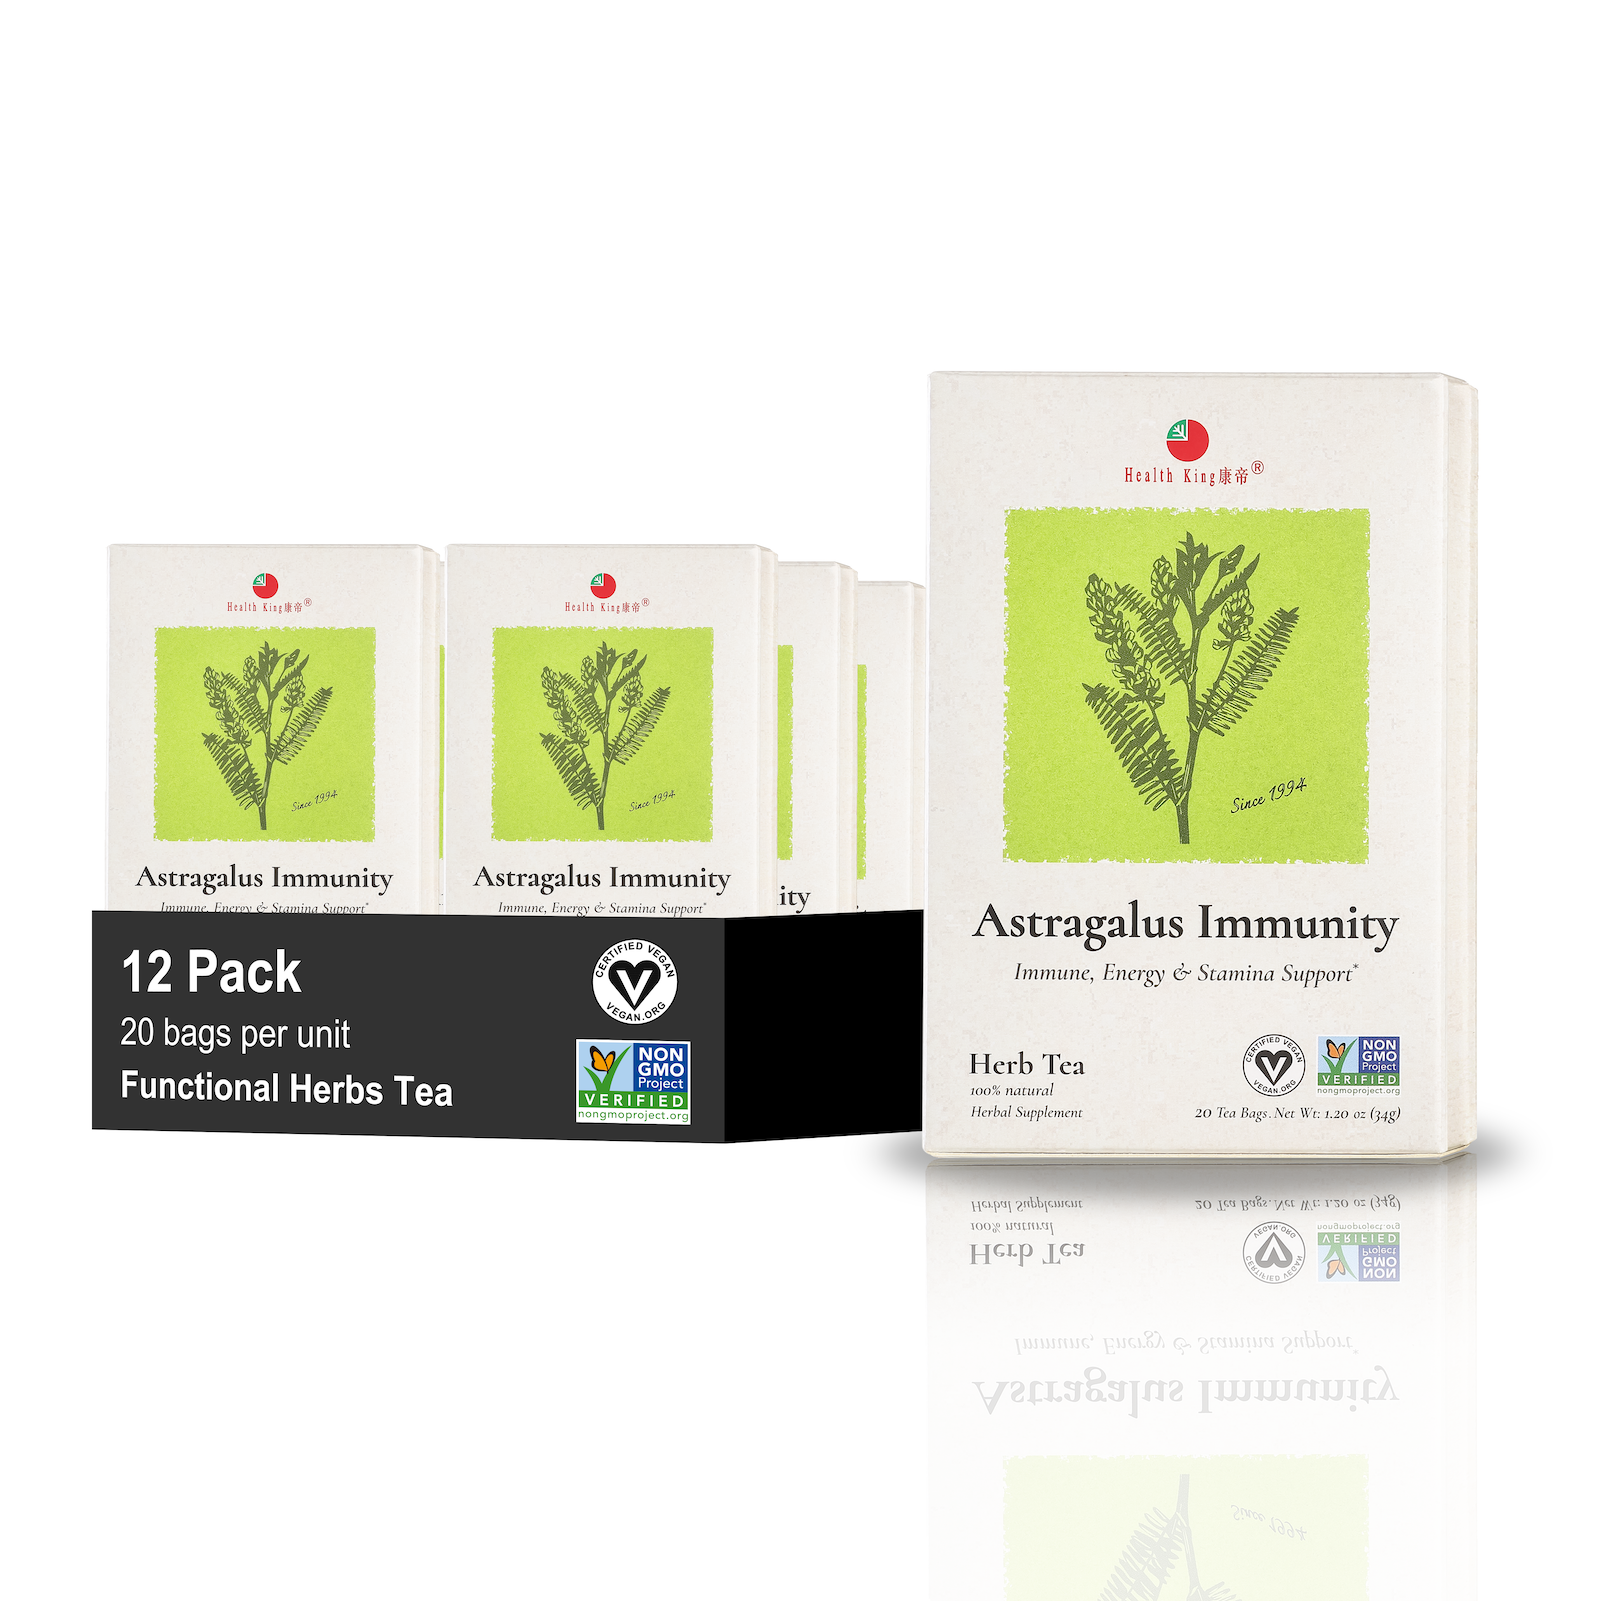 Astragalus Immunity Herb Tea packaging featuring a green leaf design